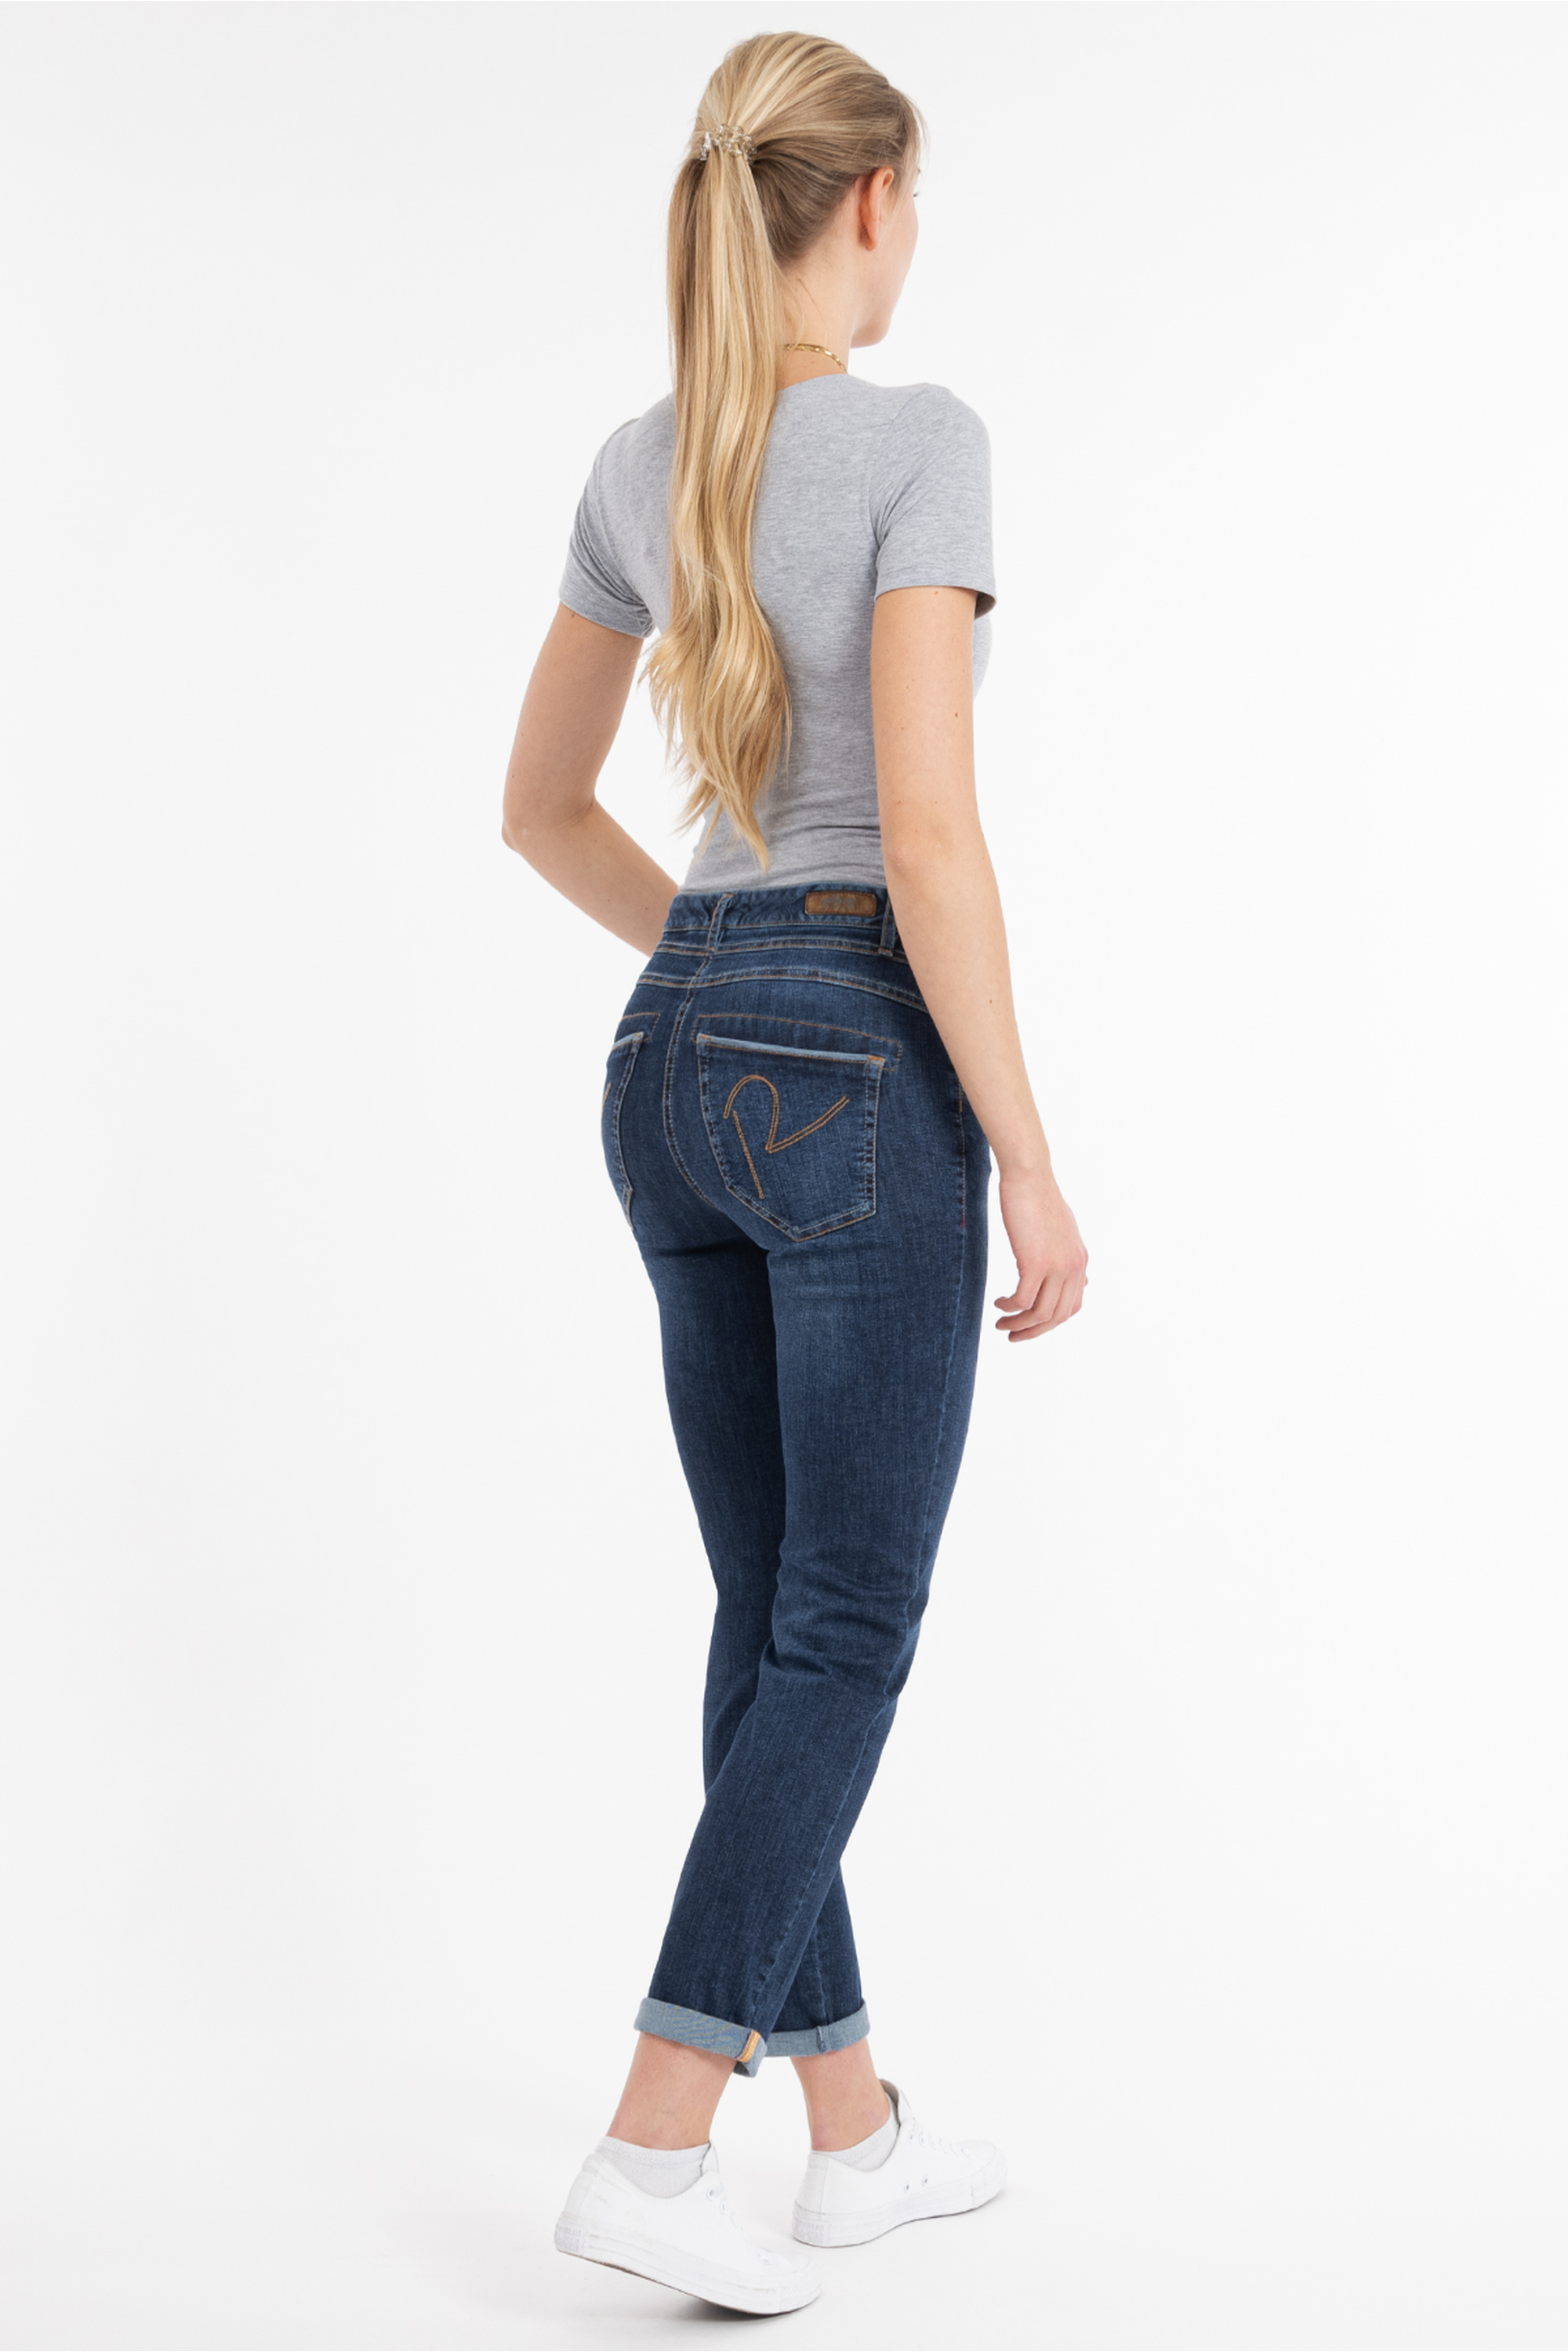 ALARA Pants Recover Slim-Jeans DENIM-BLUE offizielle in Onlineshop | Der